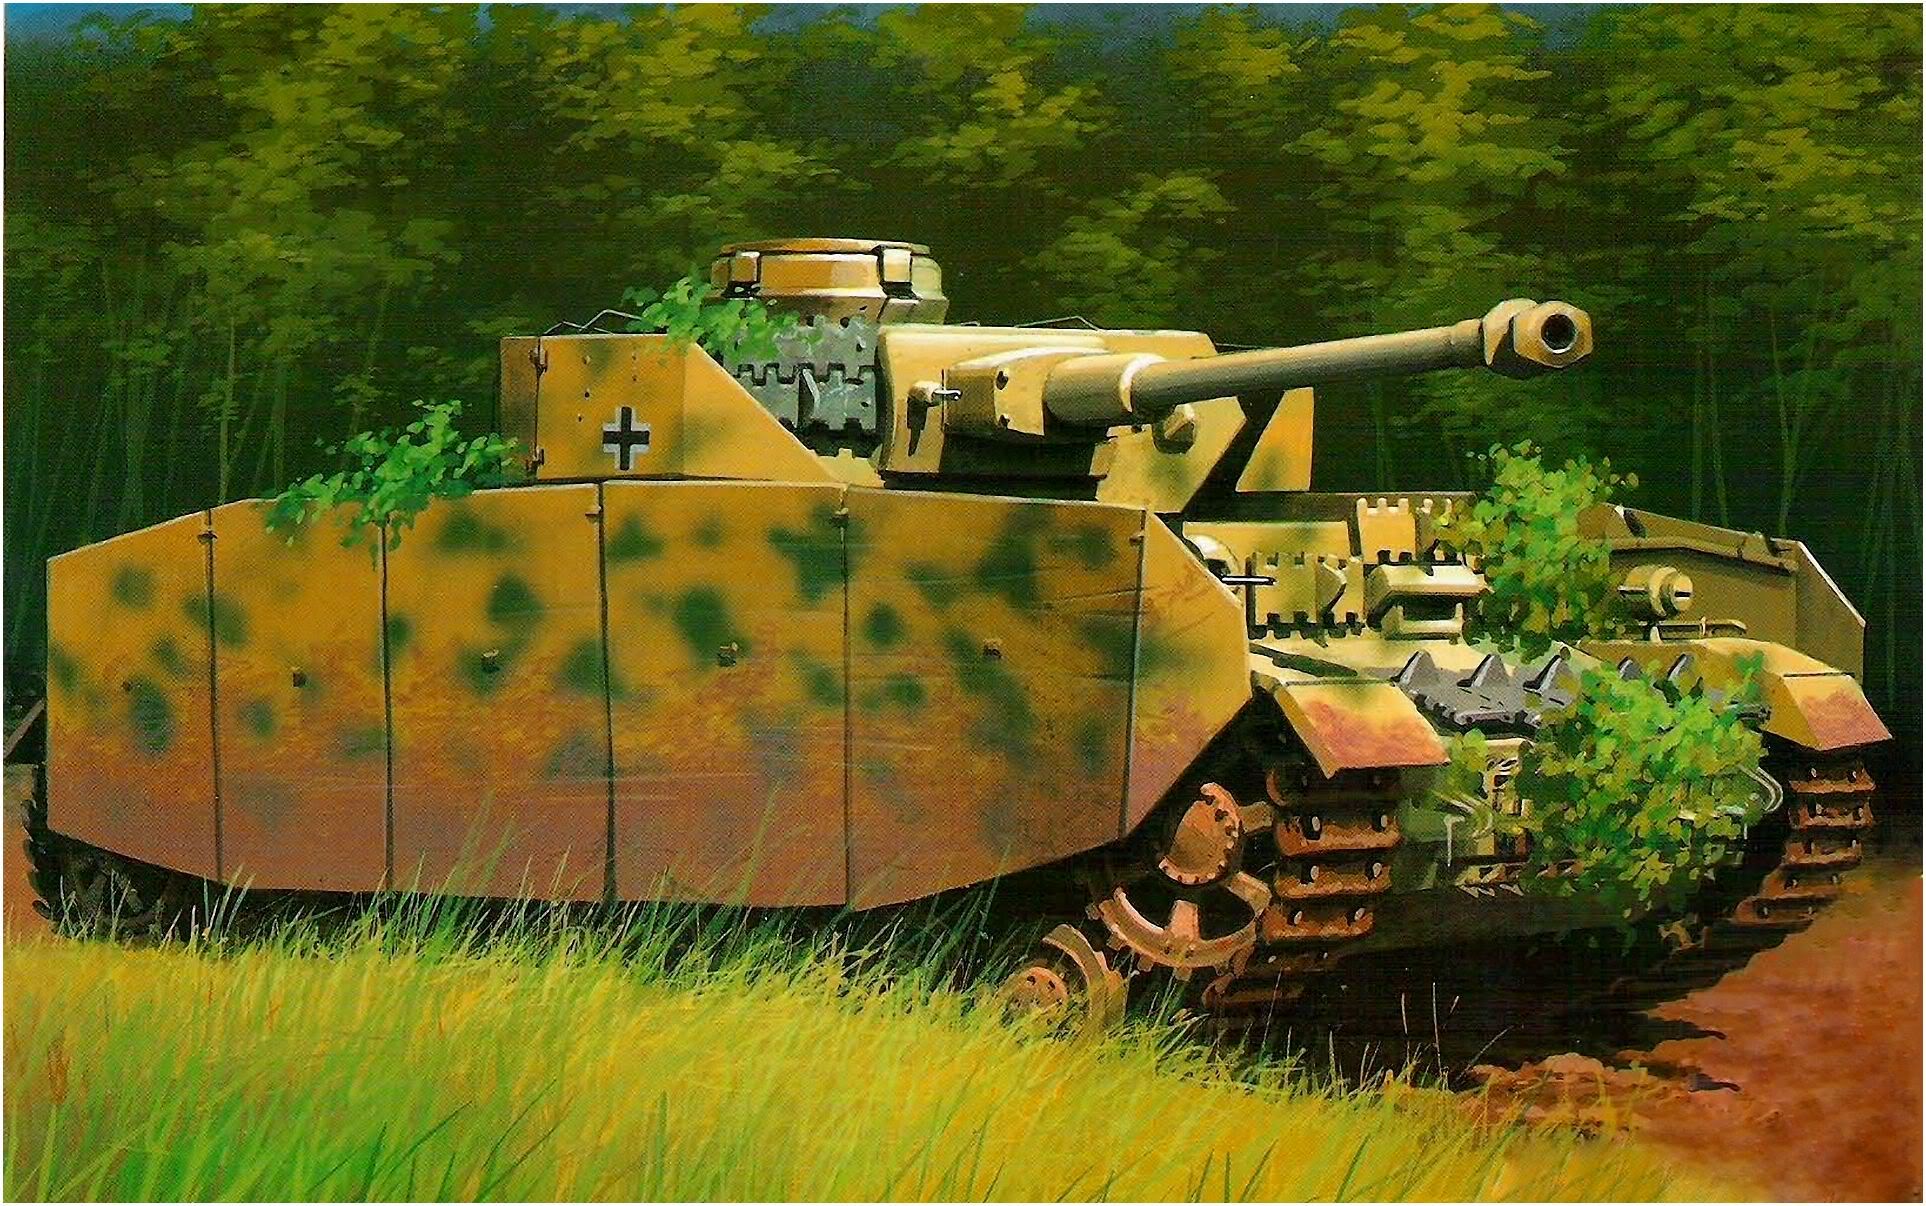 Wróbel Arkadiusz. Танк PzKpfw IV Ausf F2.